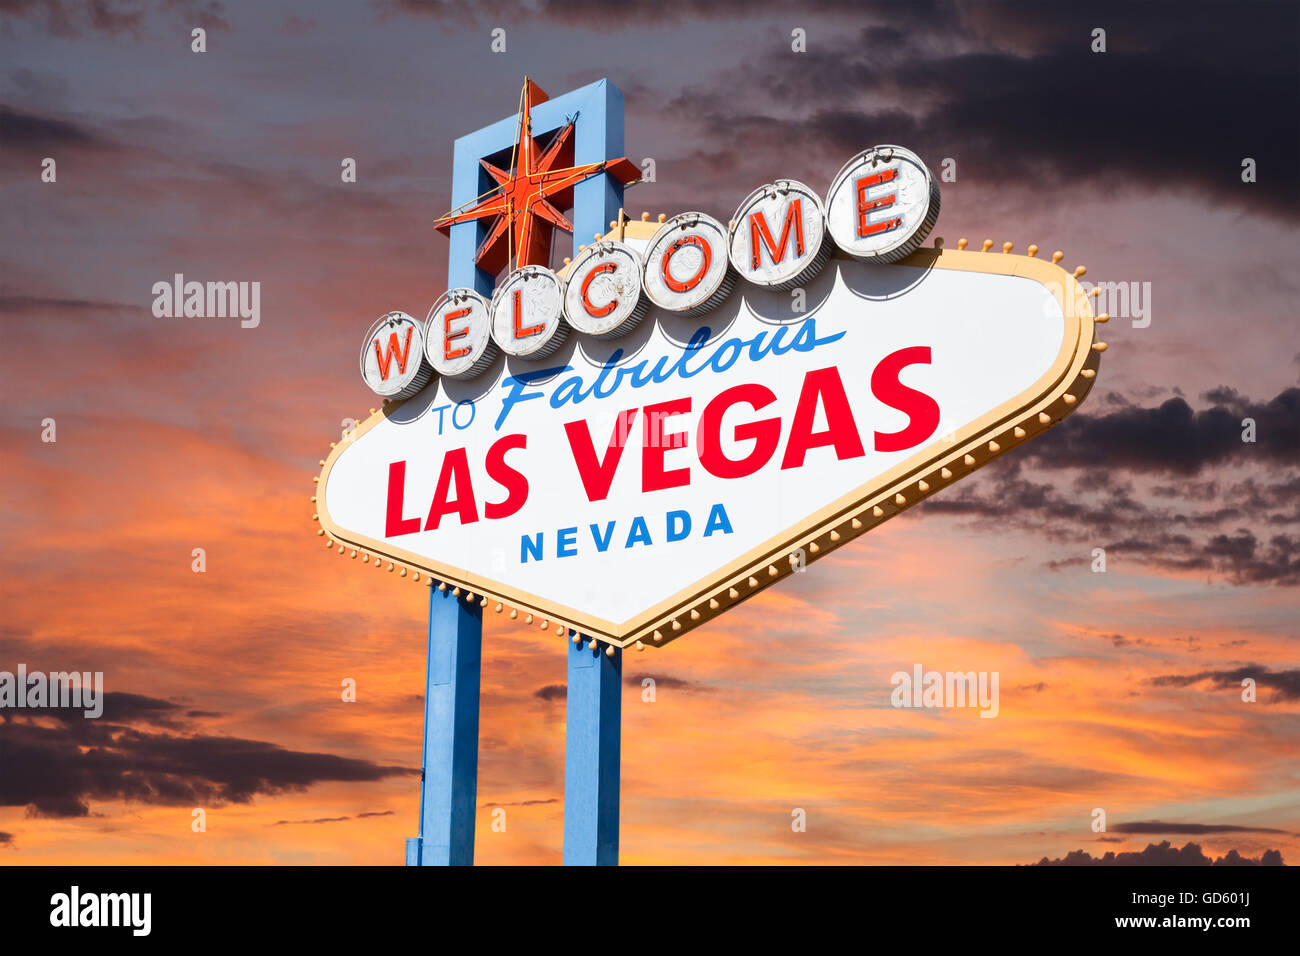 Las Vegas Willkommen Schild mit Sonnenaufgang Himmel. Stockfoto